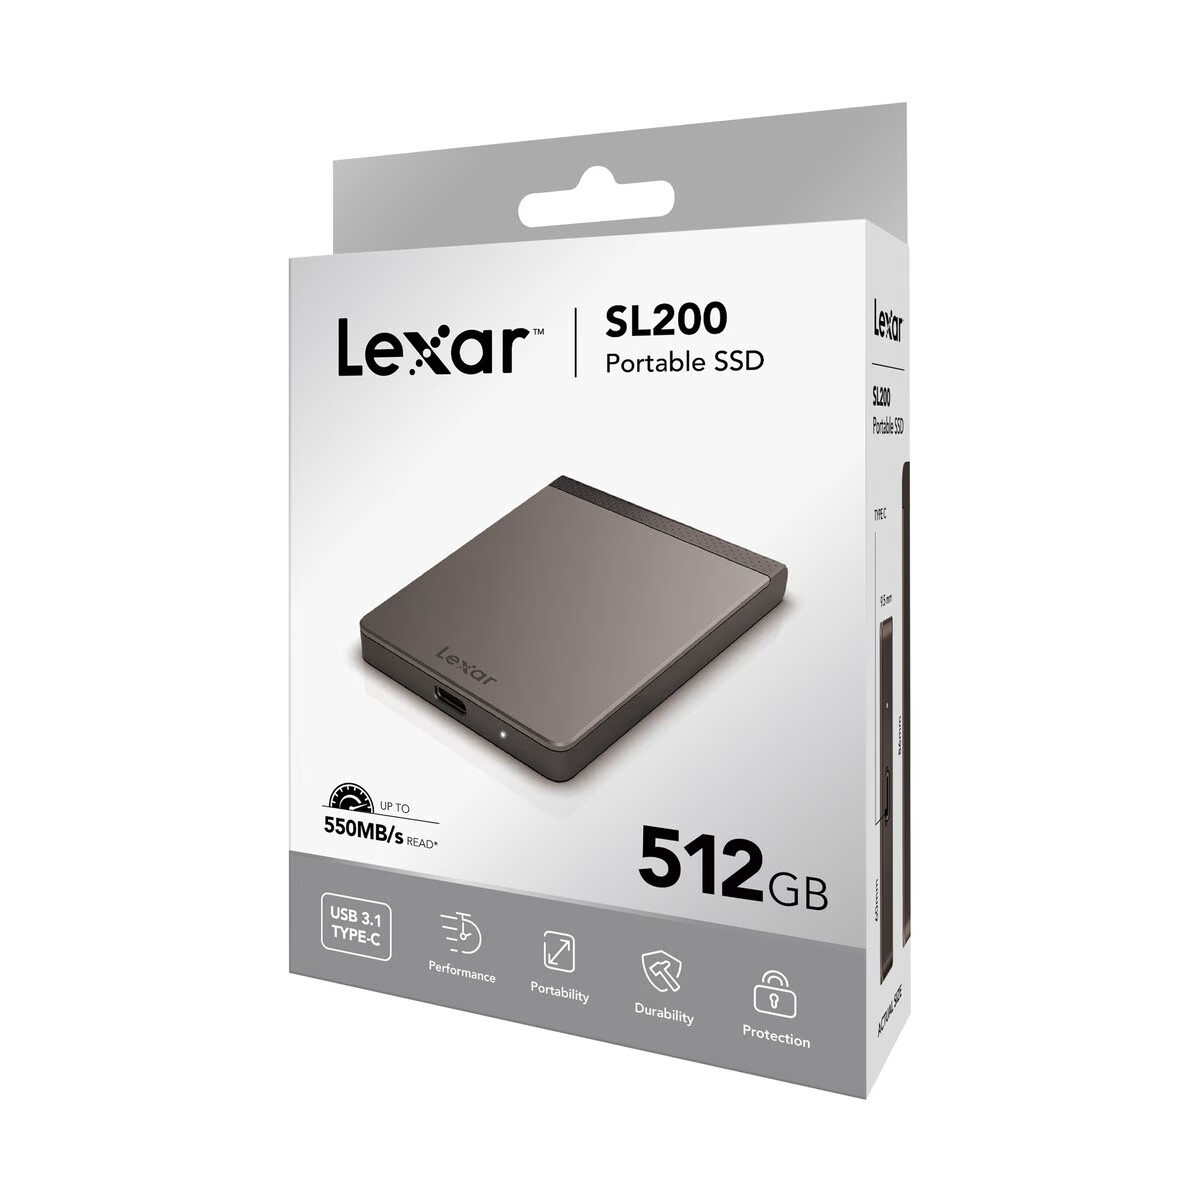 Lexar SL200 550Mbps Portable SSD, Storage: 512GB